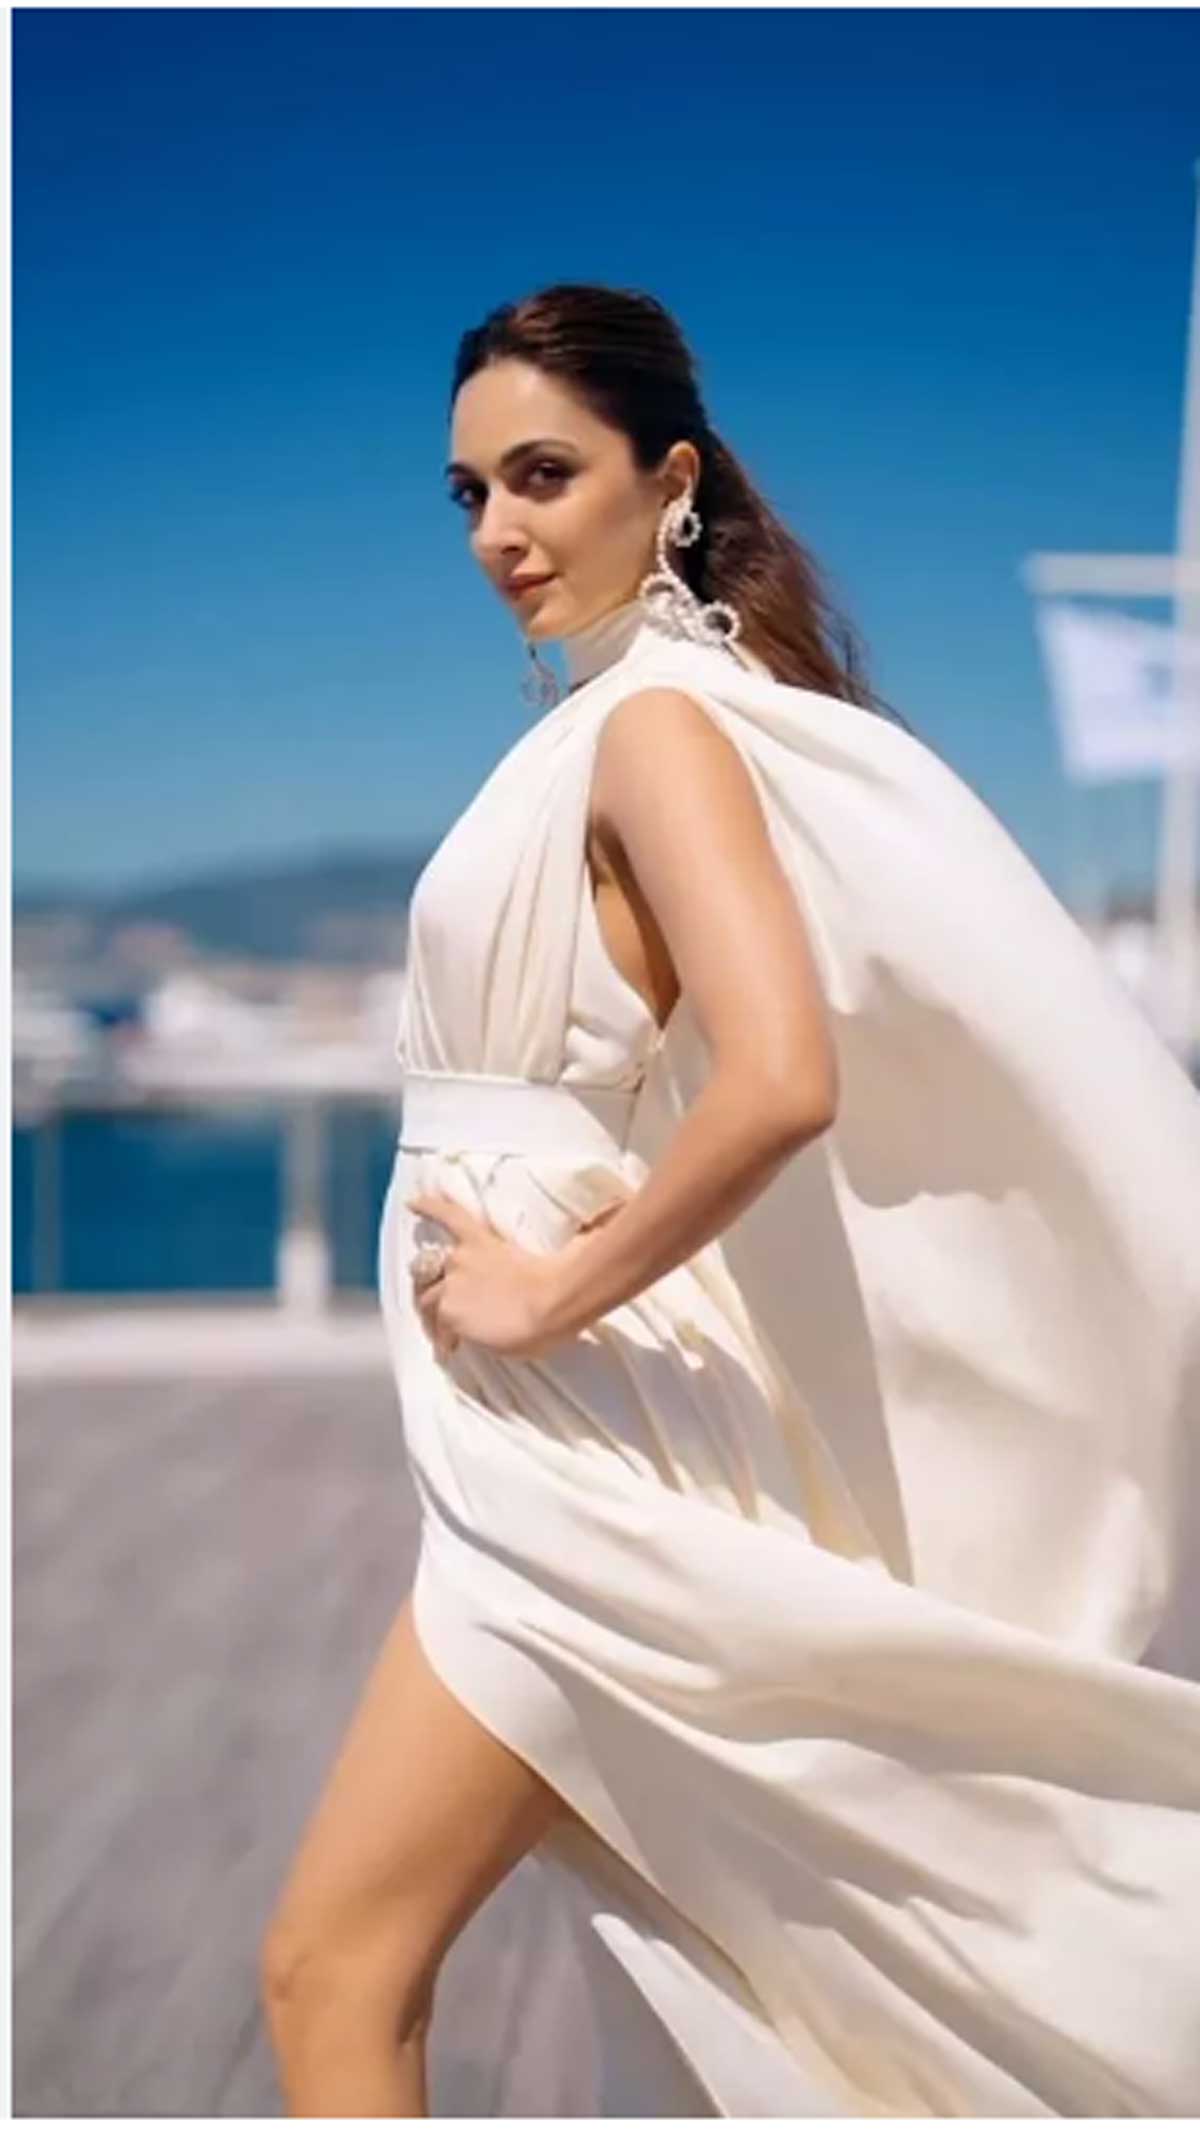 Kiara Advani looks divine in her 1st look at Cannes